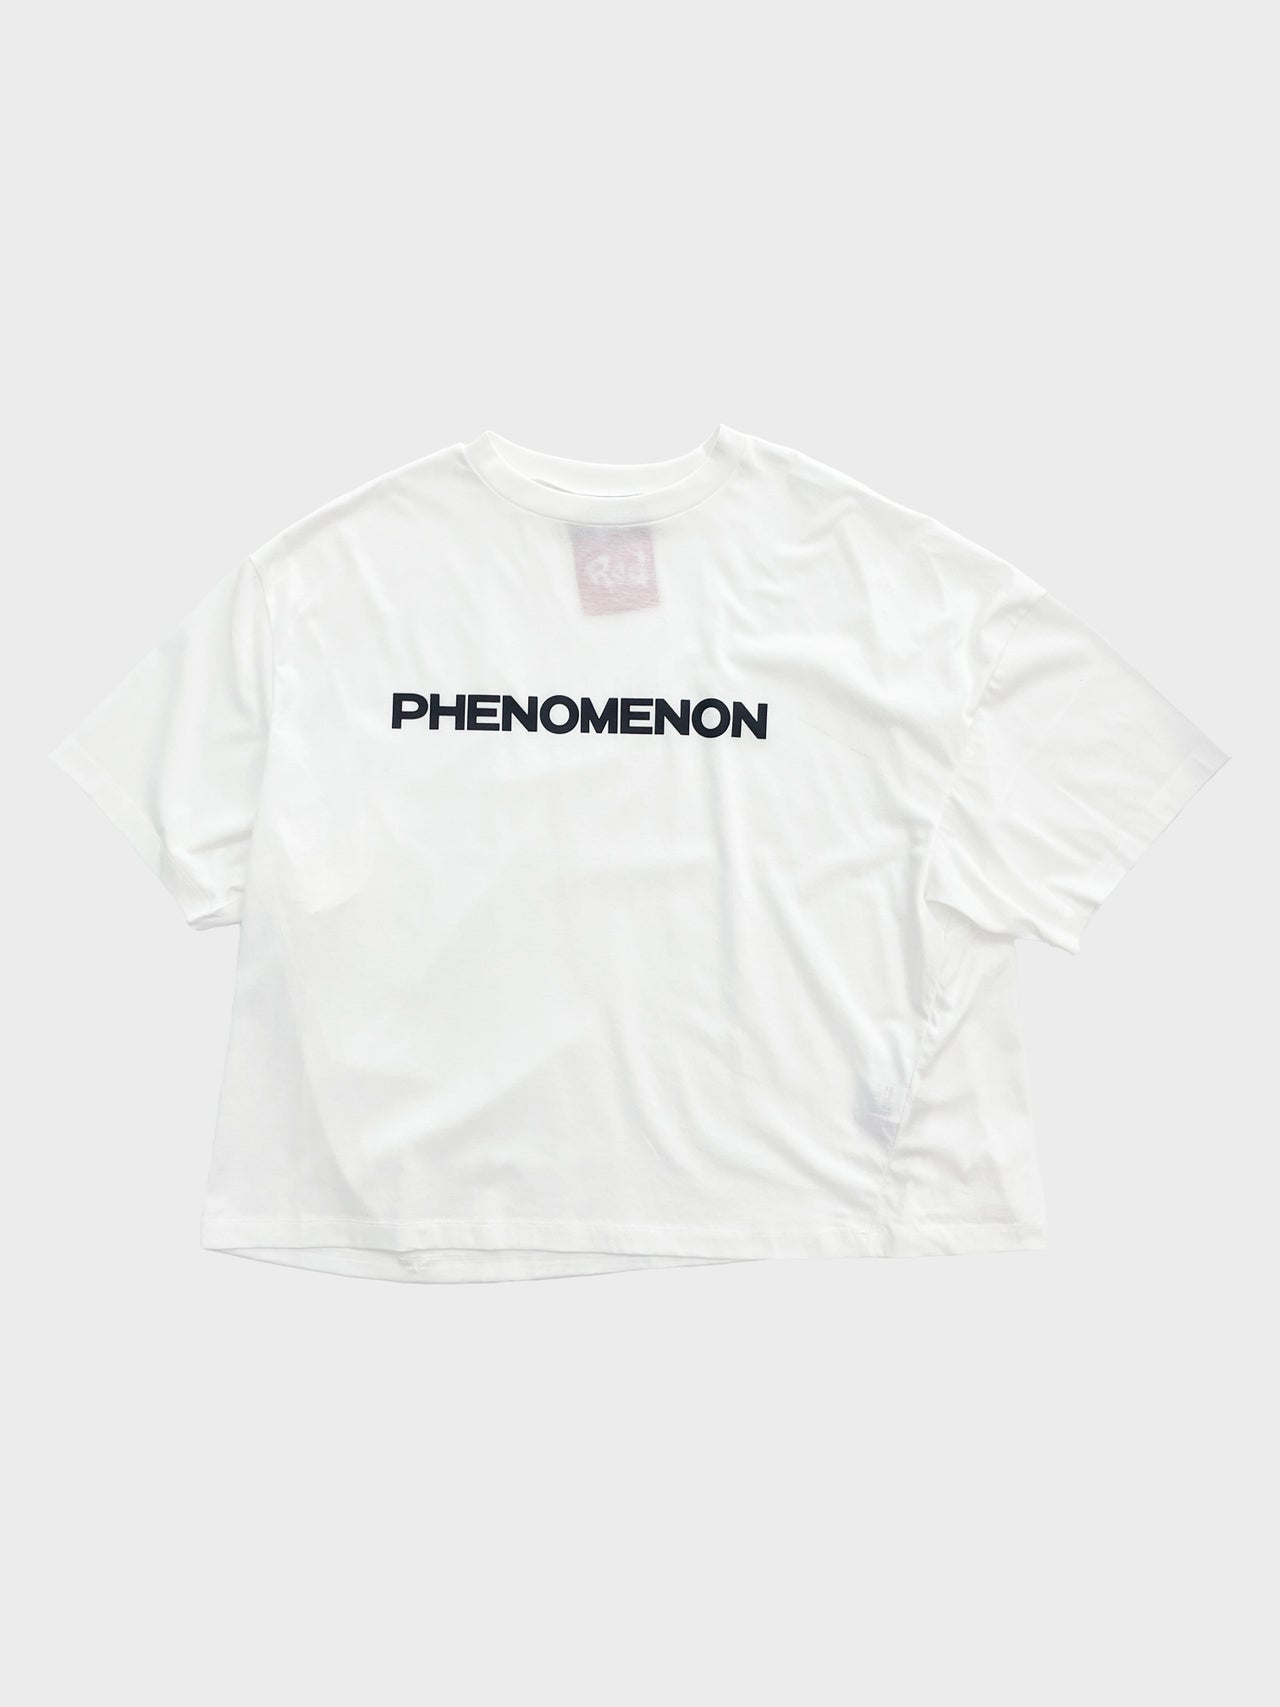 【30%OFF】PHENOMENON by FUMITO GANRYU / GRAFFITI T-SHIRT(WHITE)